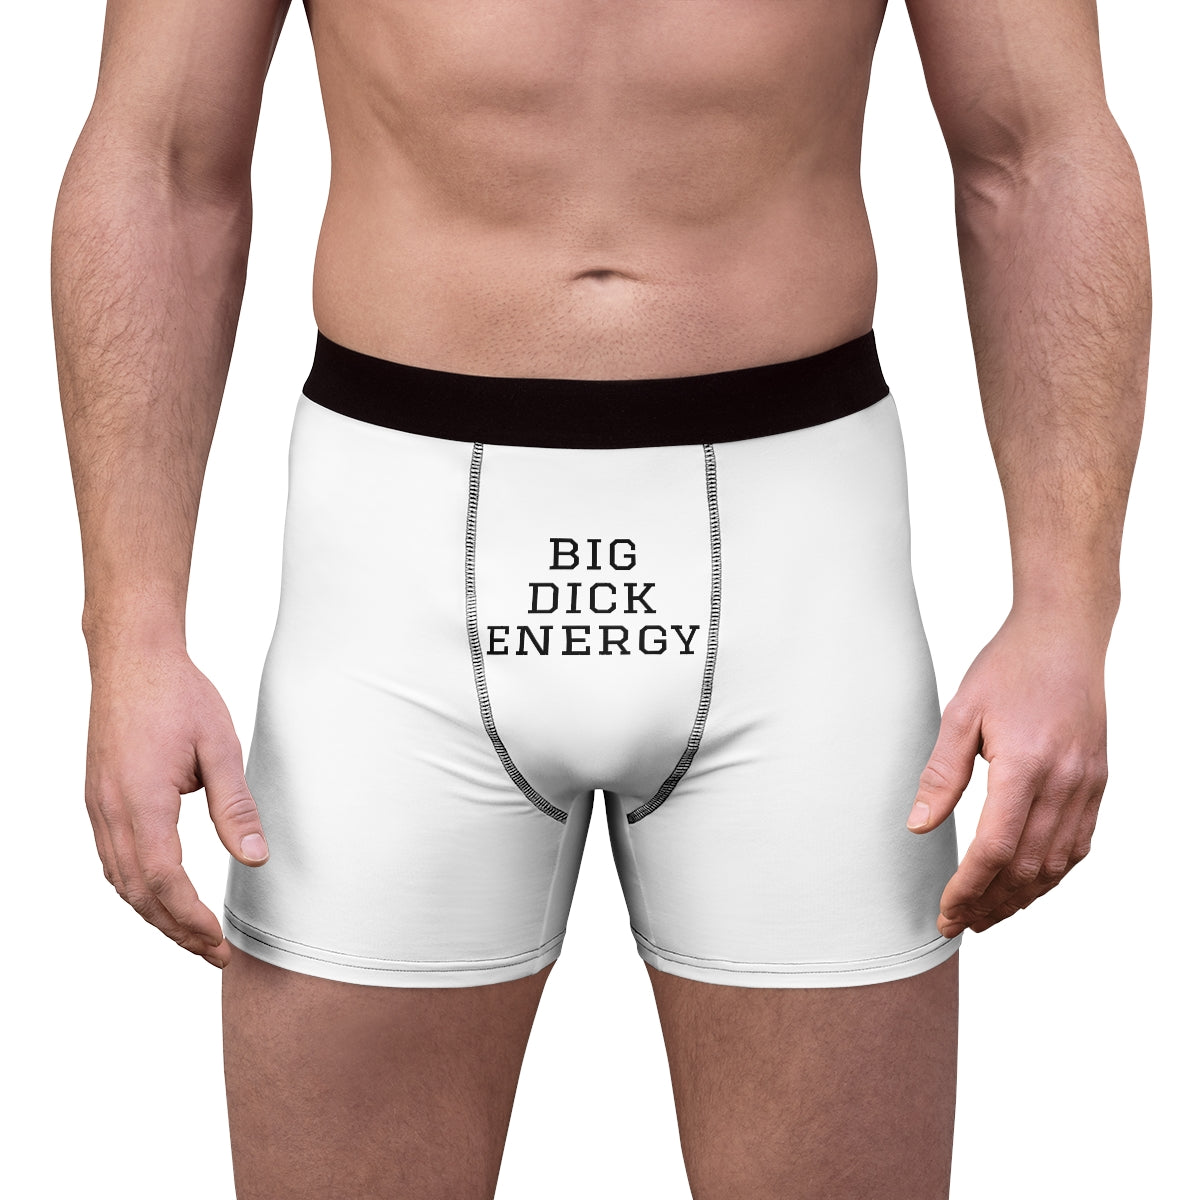 daren nick recommends underwear for men with big dicks pic